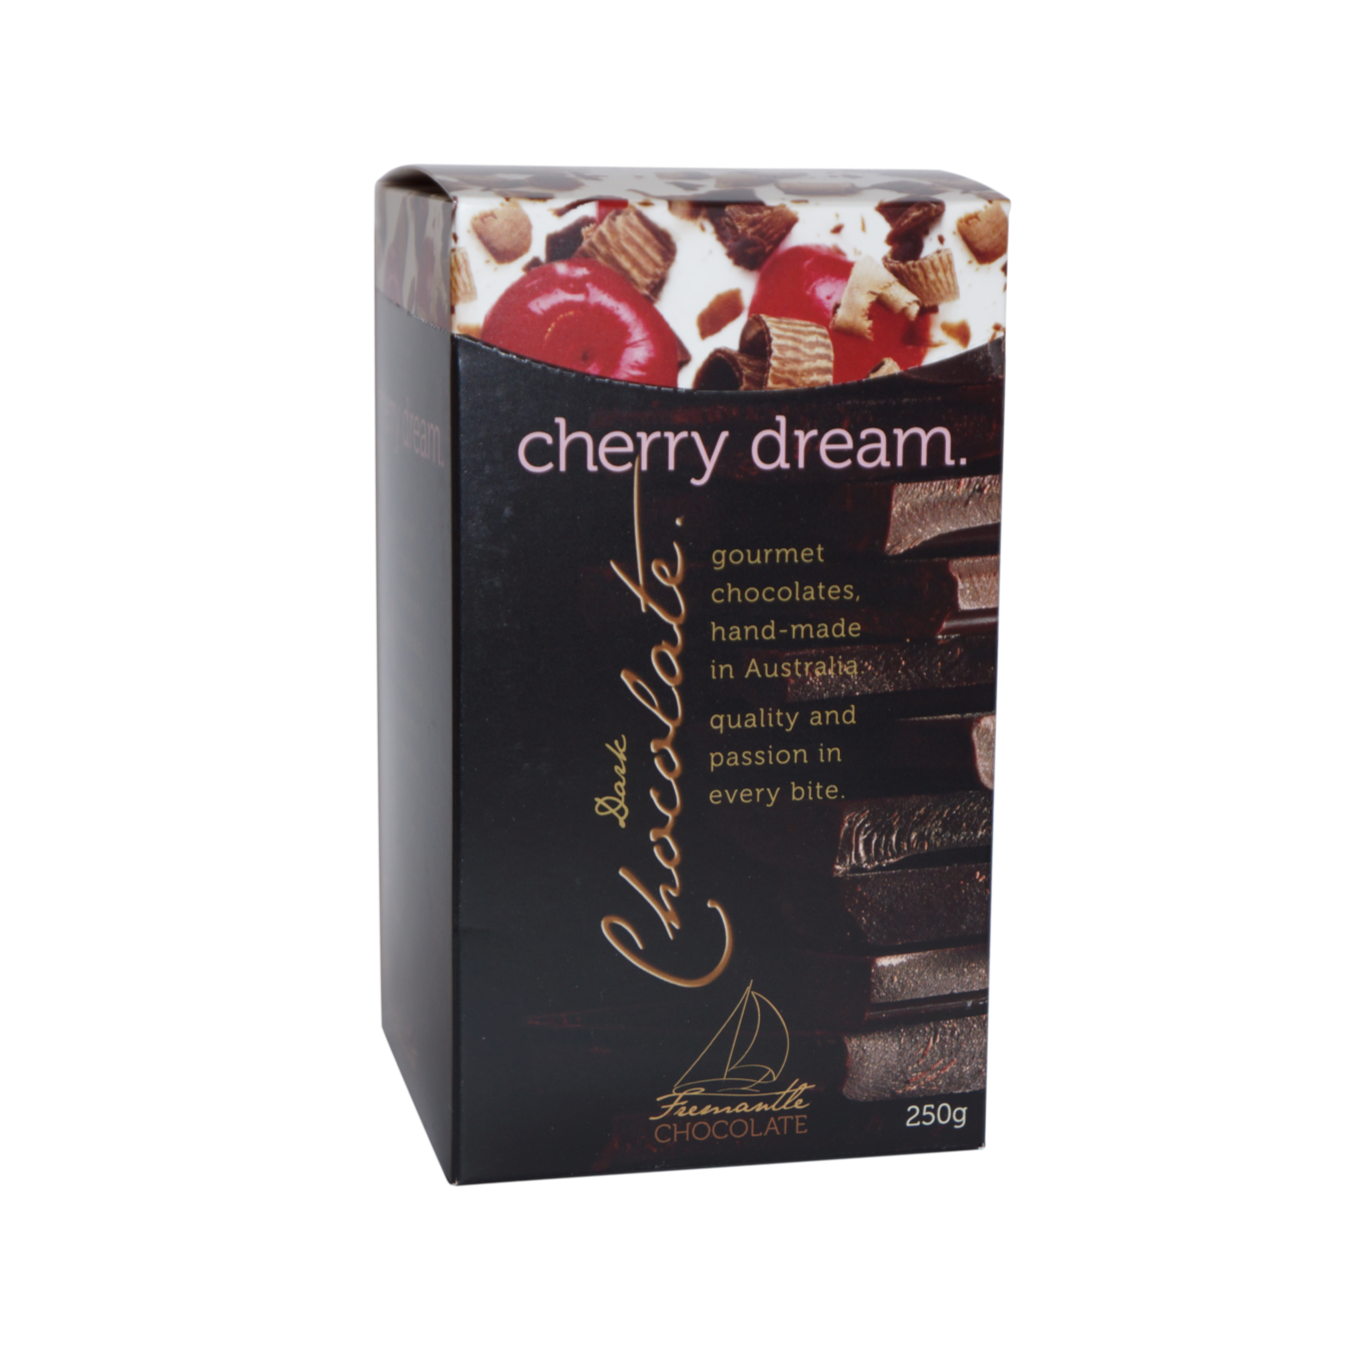 Fremantle Chocolate | Dark Chocolate - Cherry Dream 250g